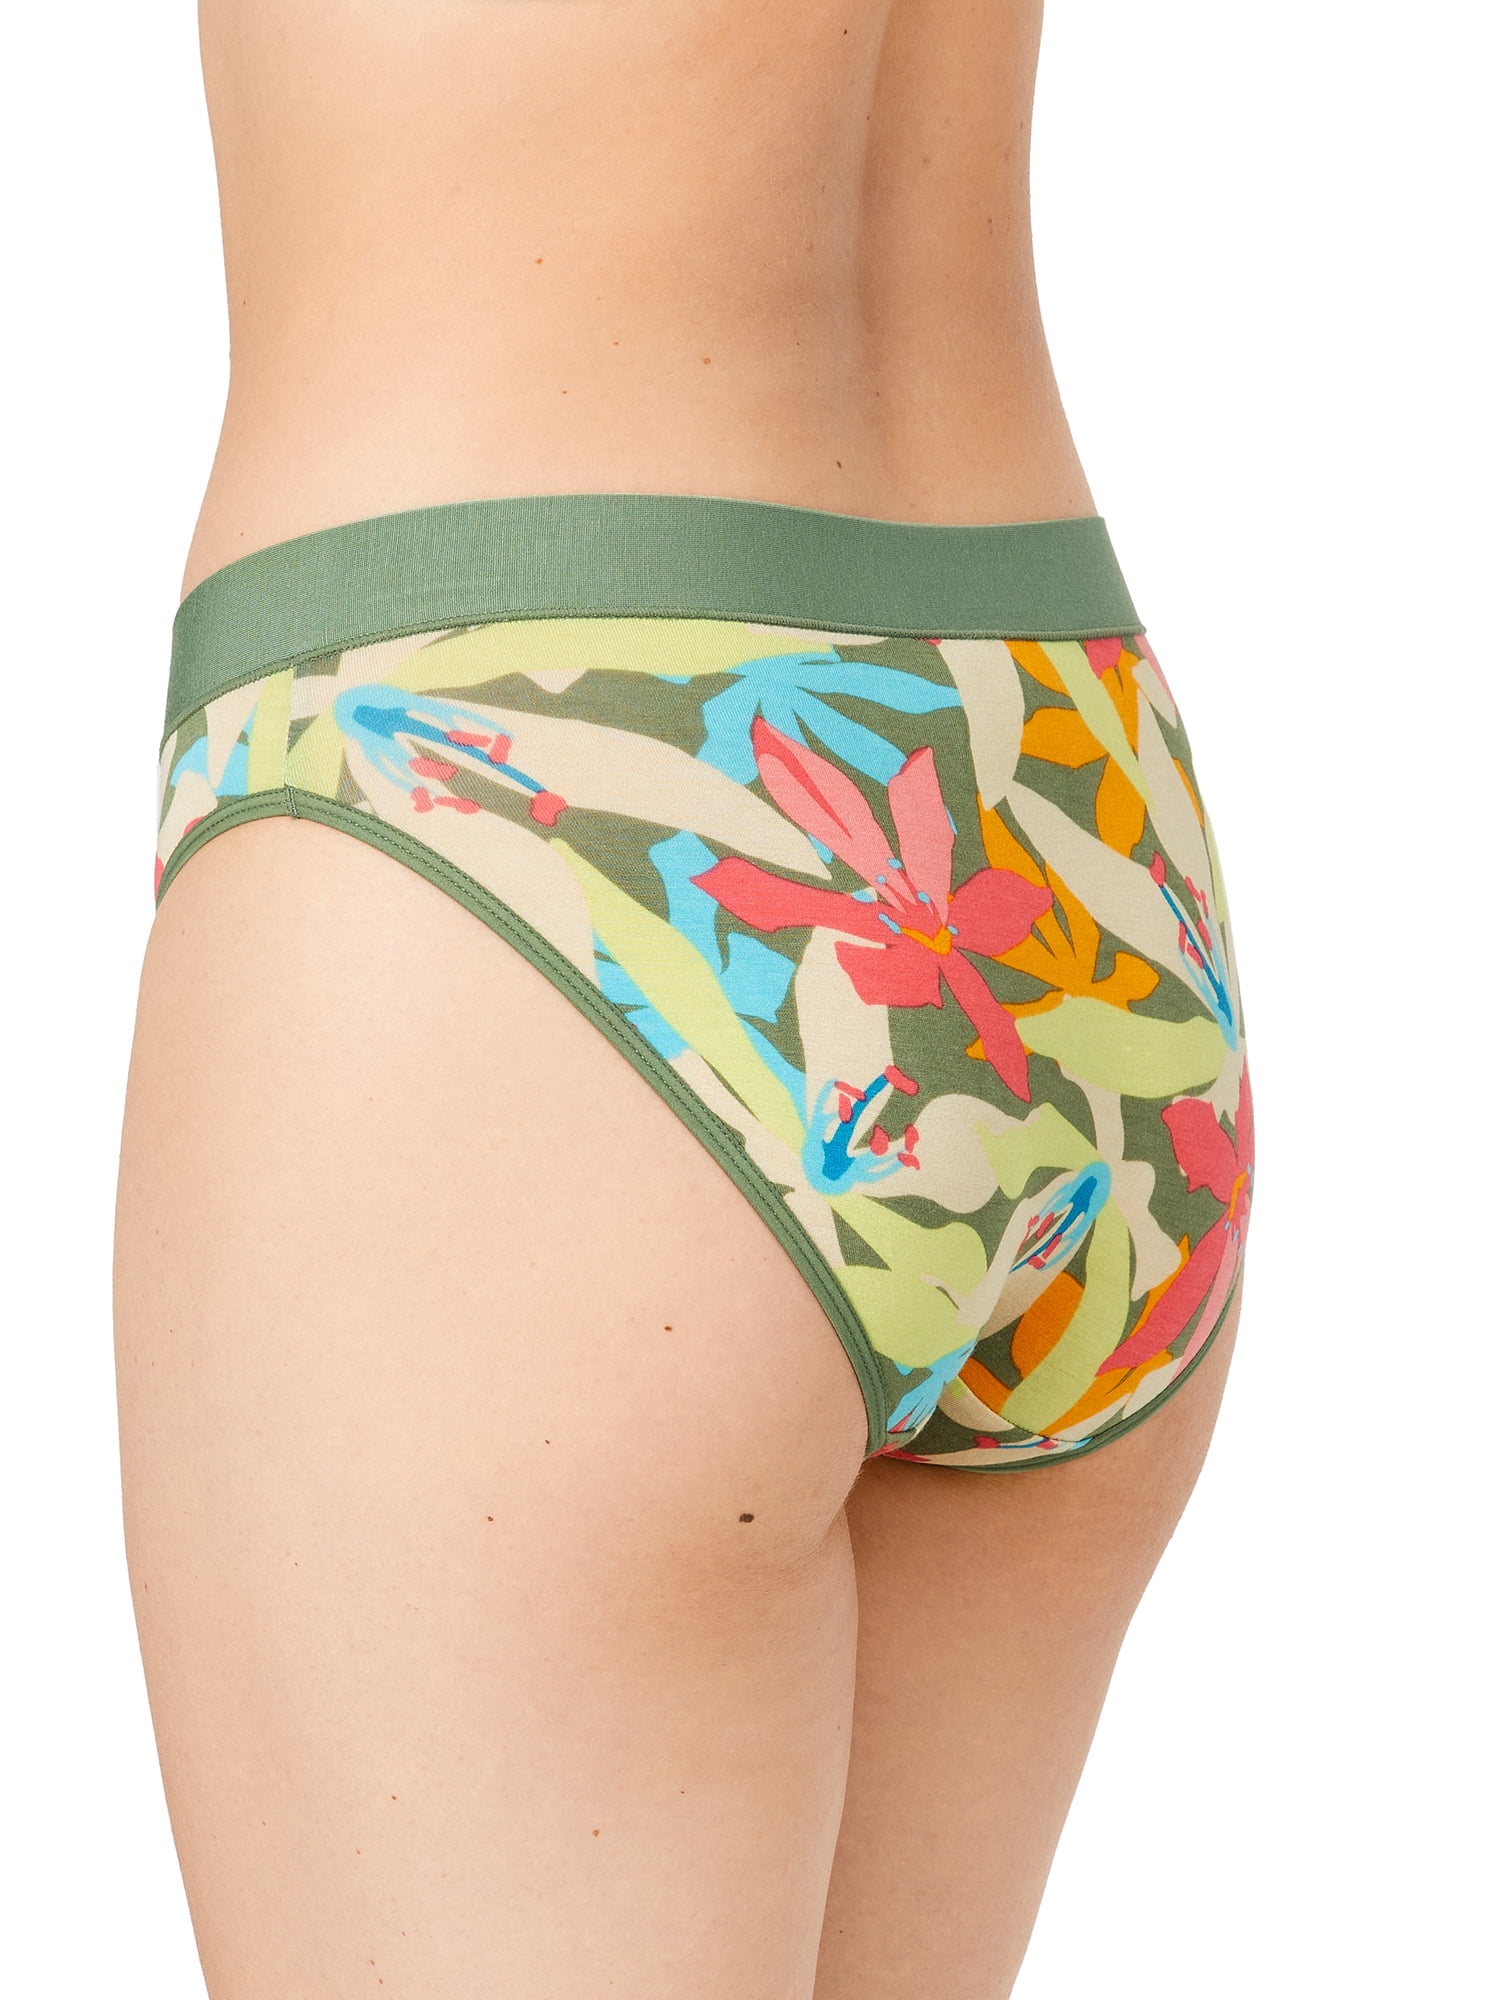 Kindly Yours Women's Comfort Modal Bikini Underwear, 2-Pack, Sizes